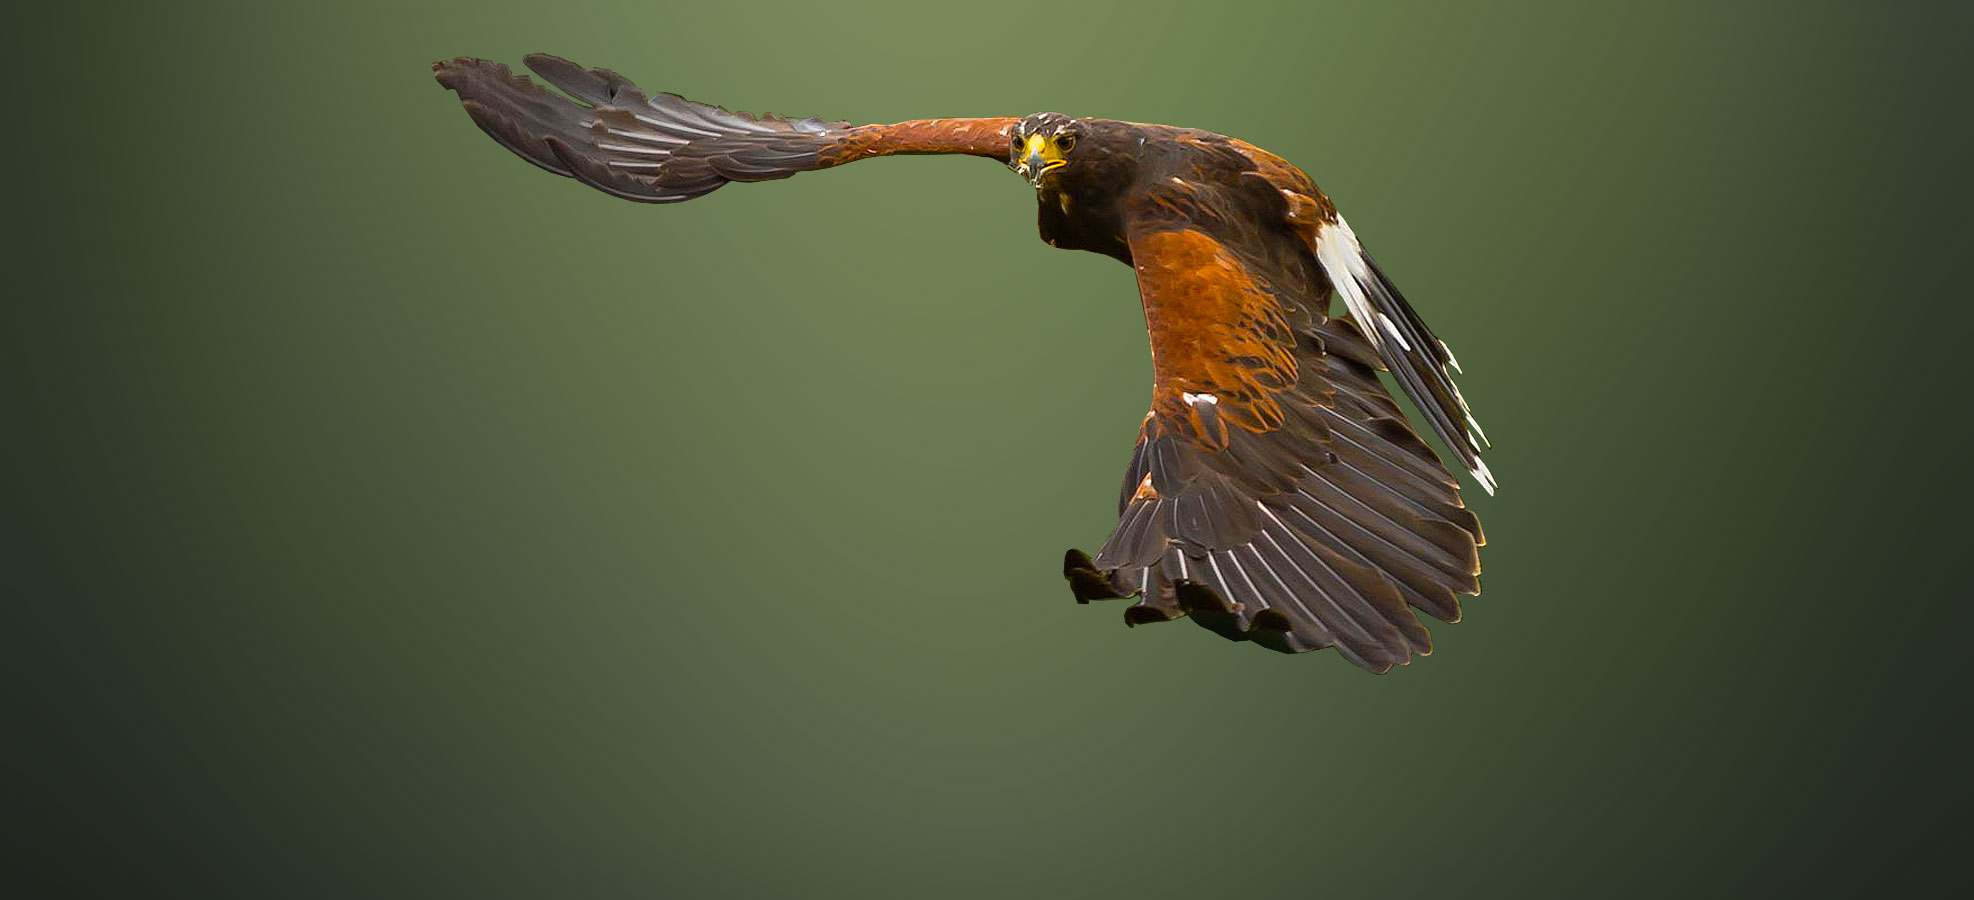 The North Devon Bird of Prey Centre